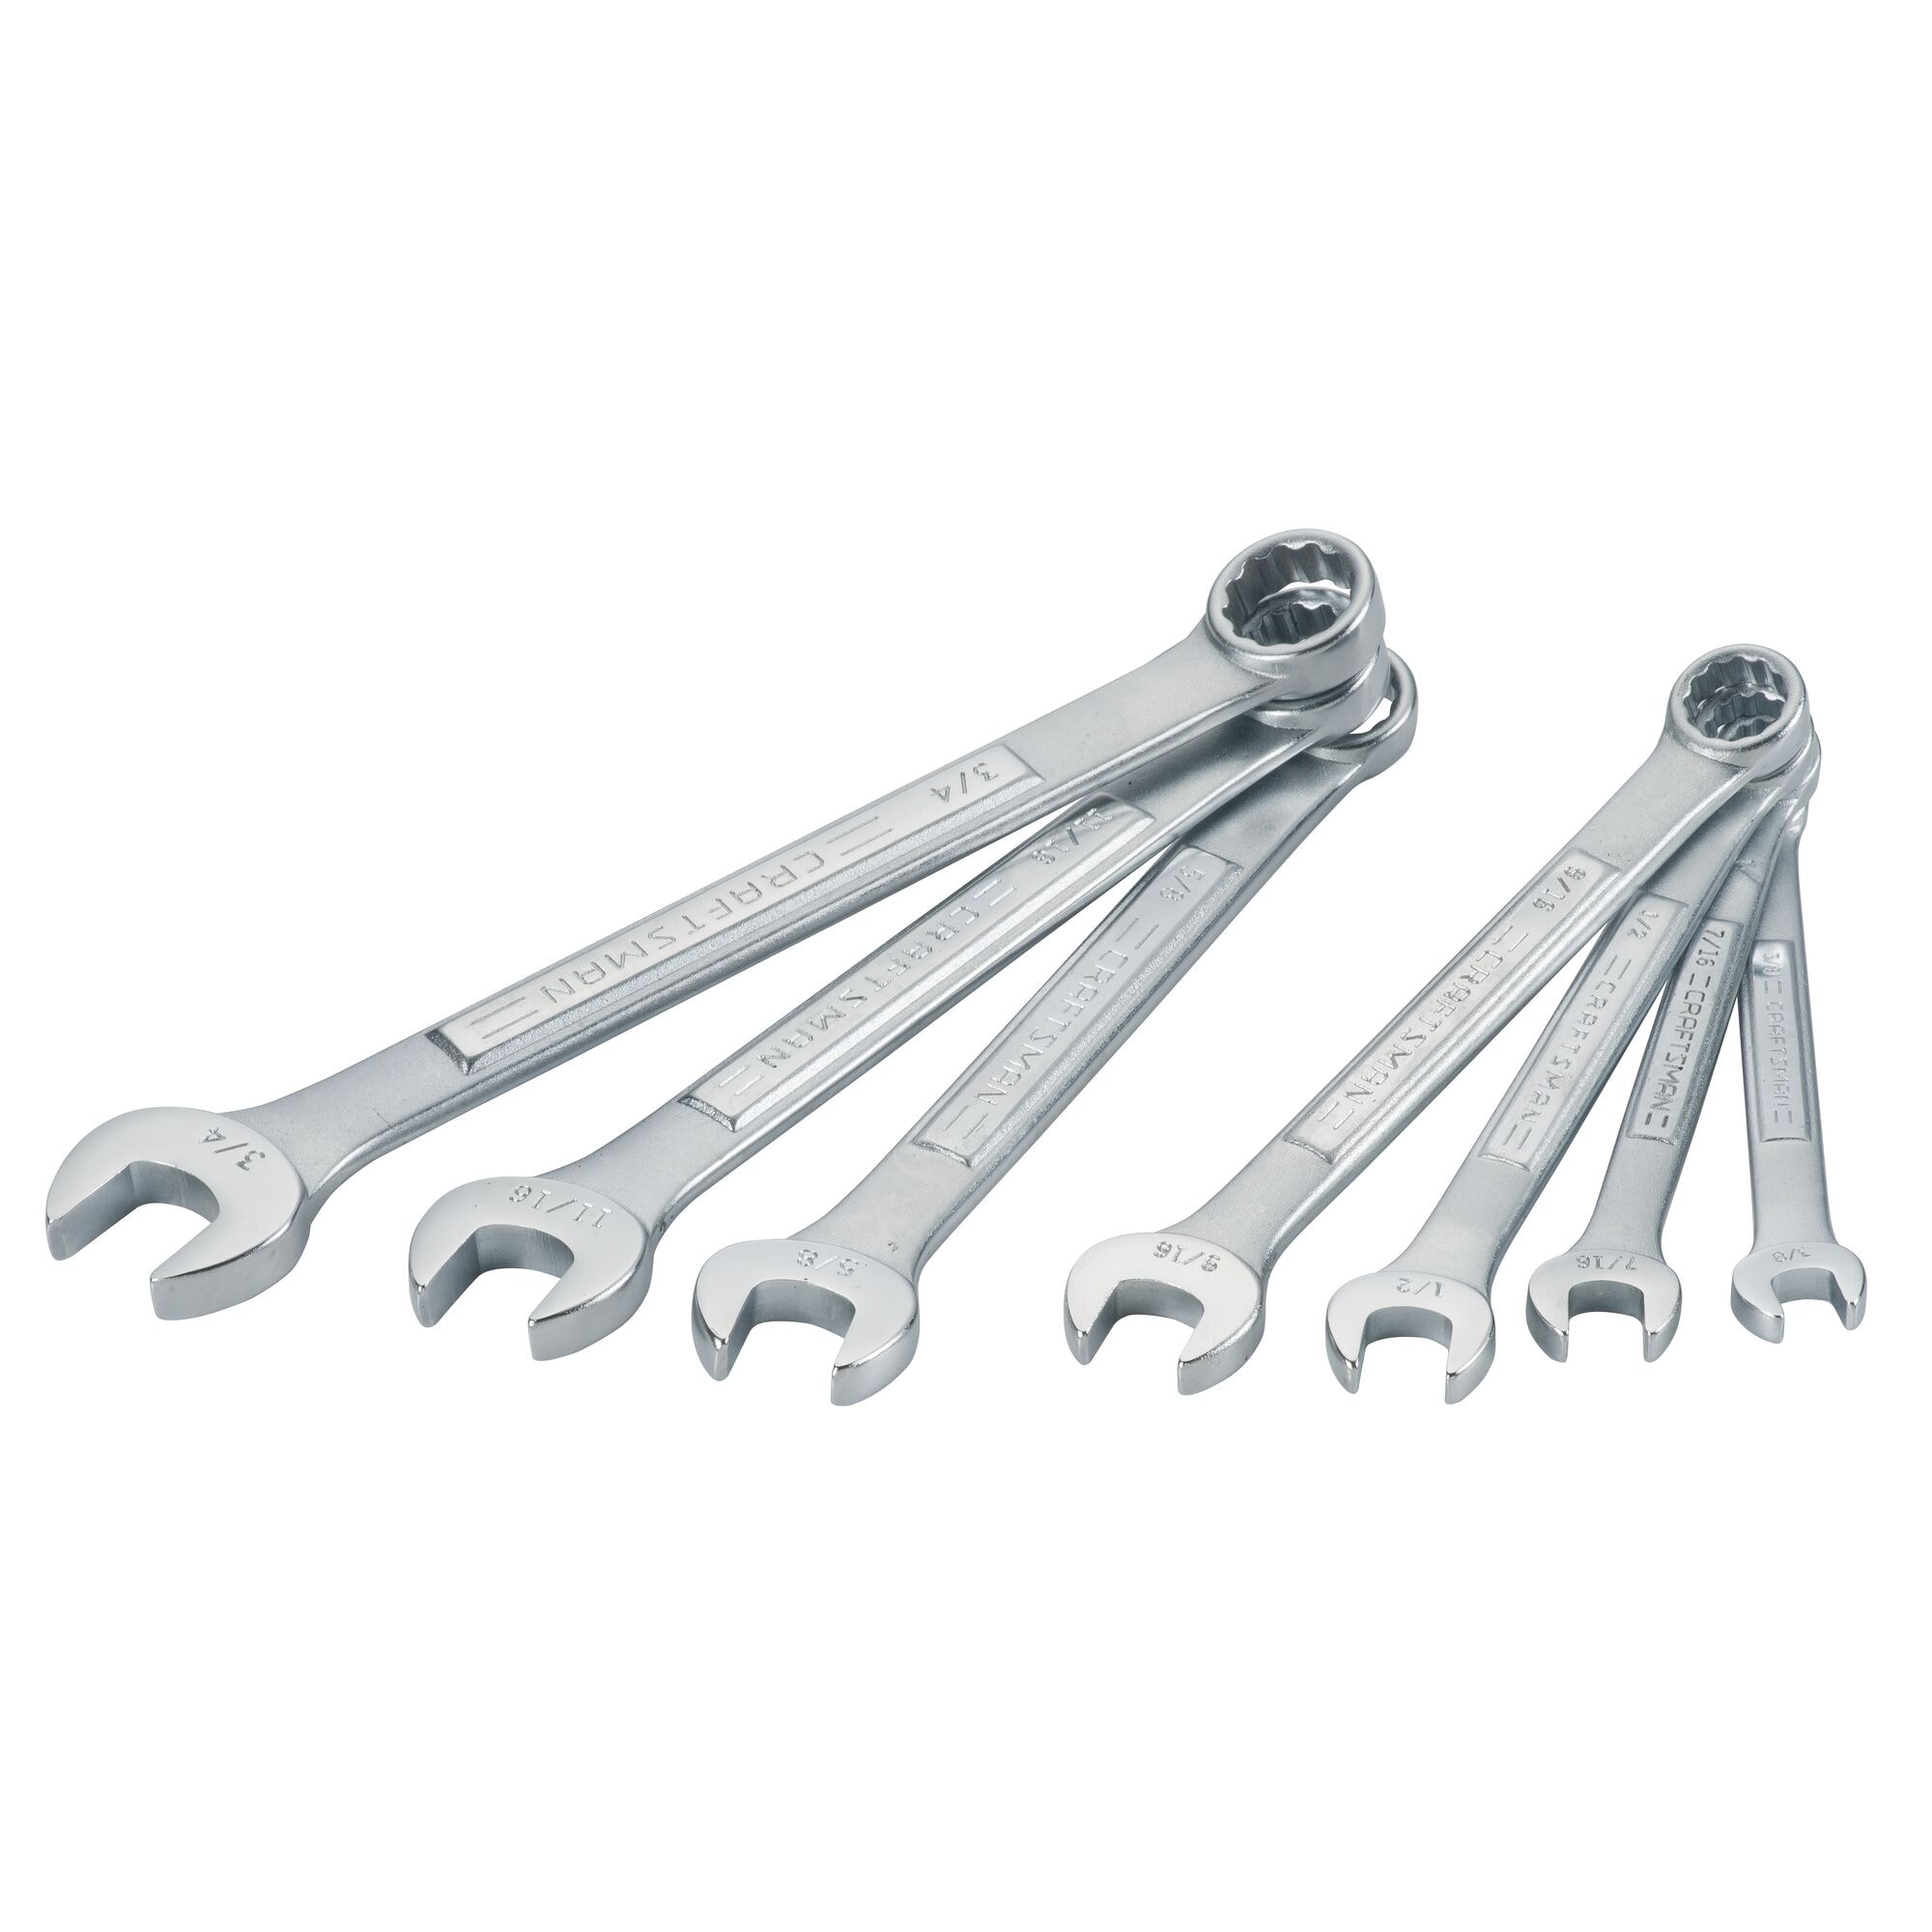 Combination Wrench Set– Shopataos